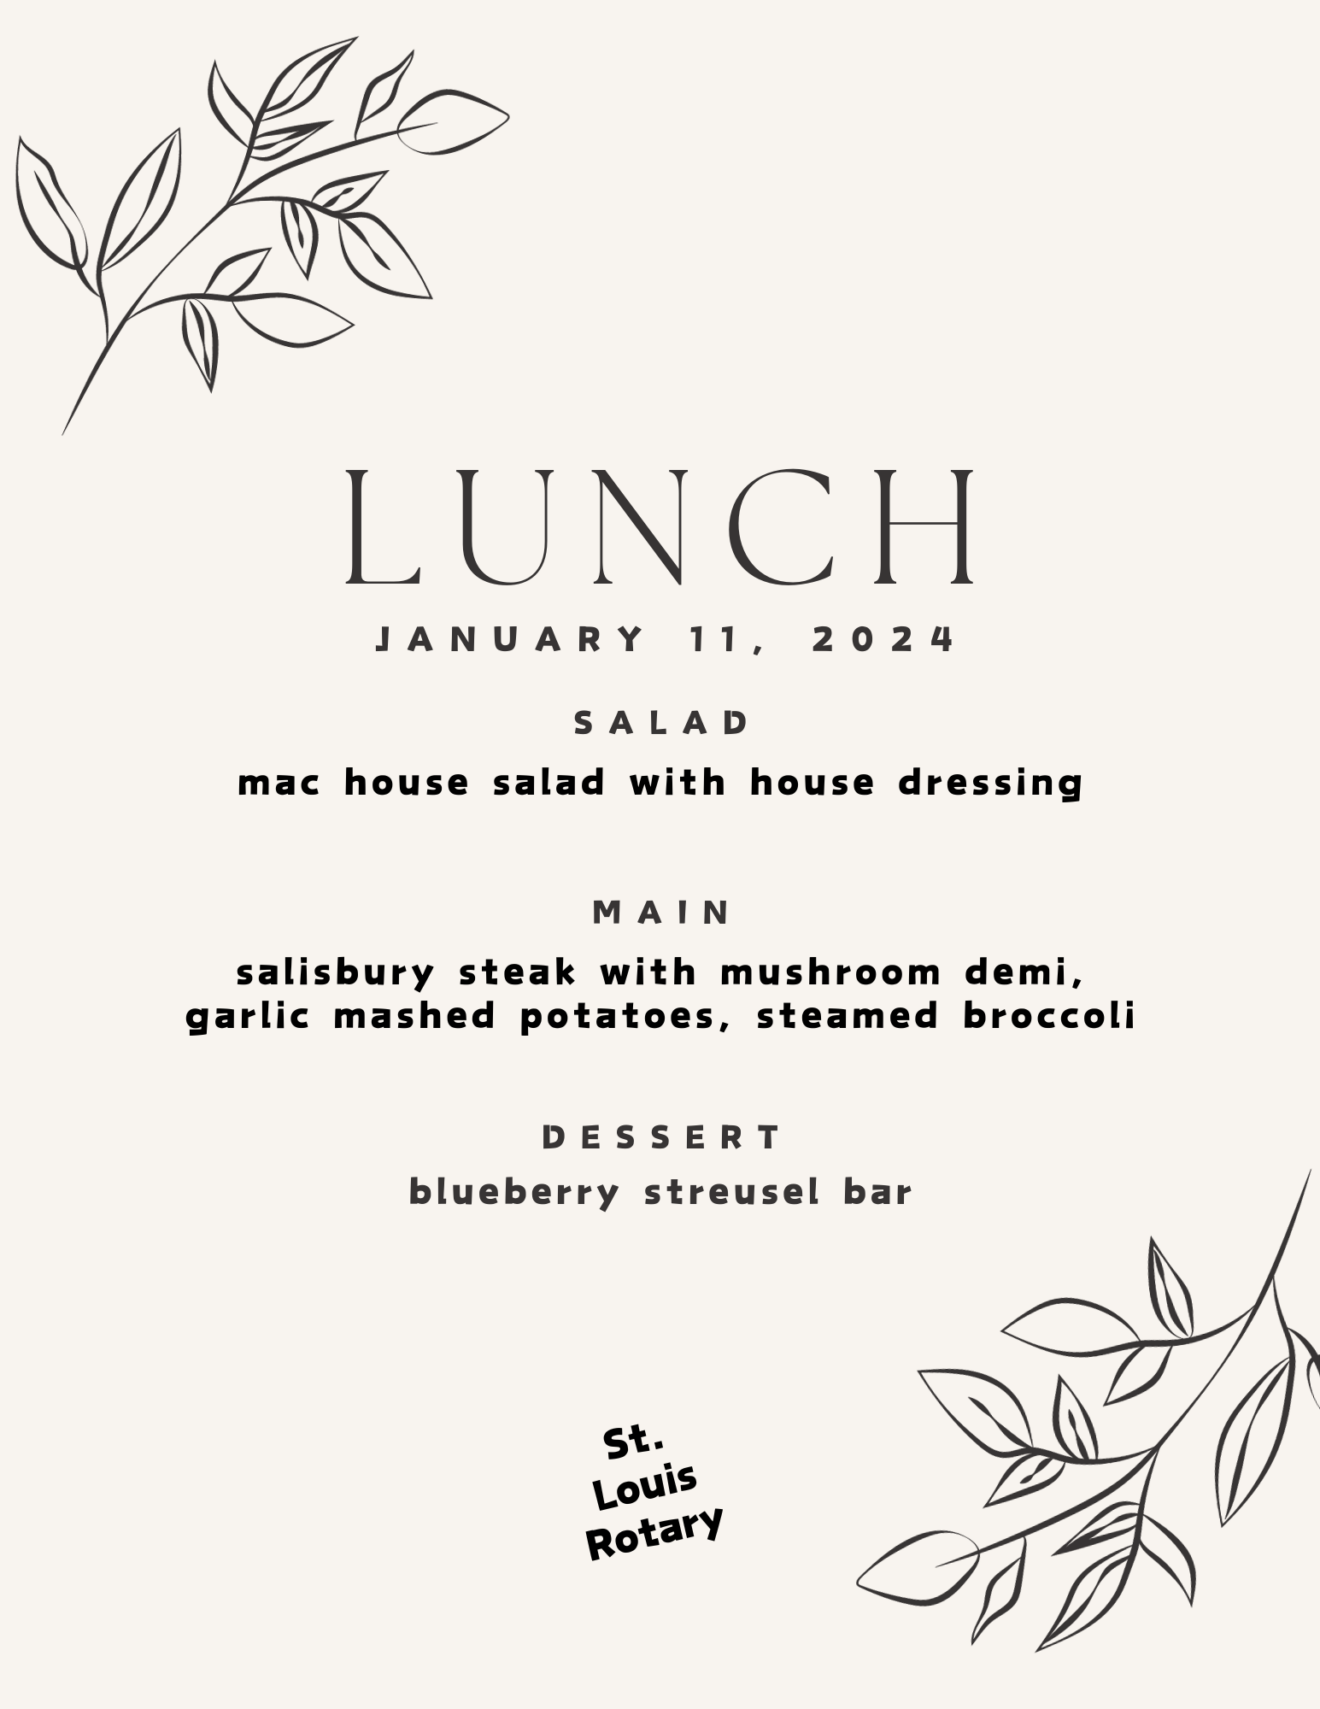 St. Louis Rotary Lunch Menu ~ January 11, 2024